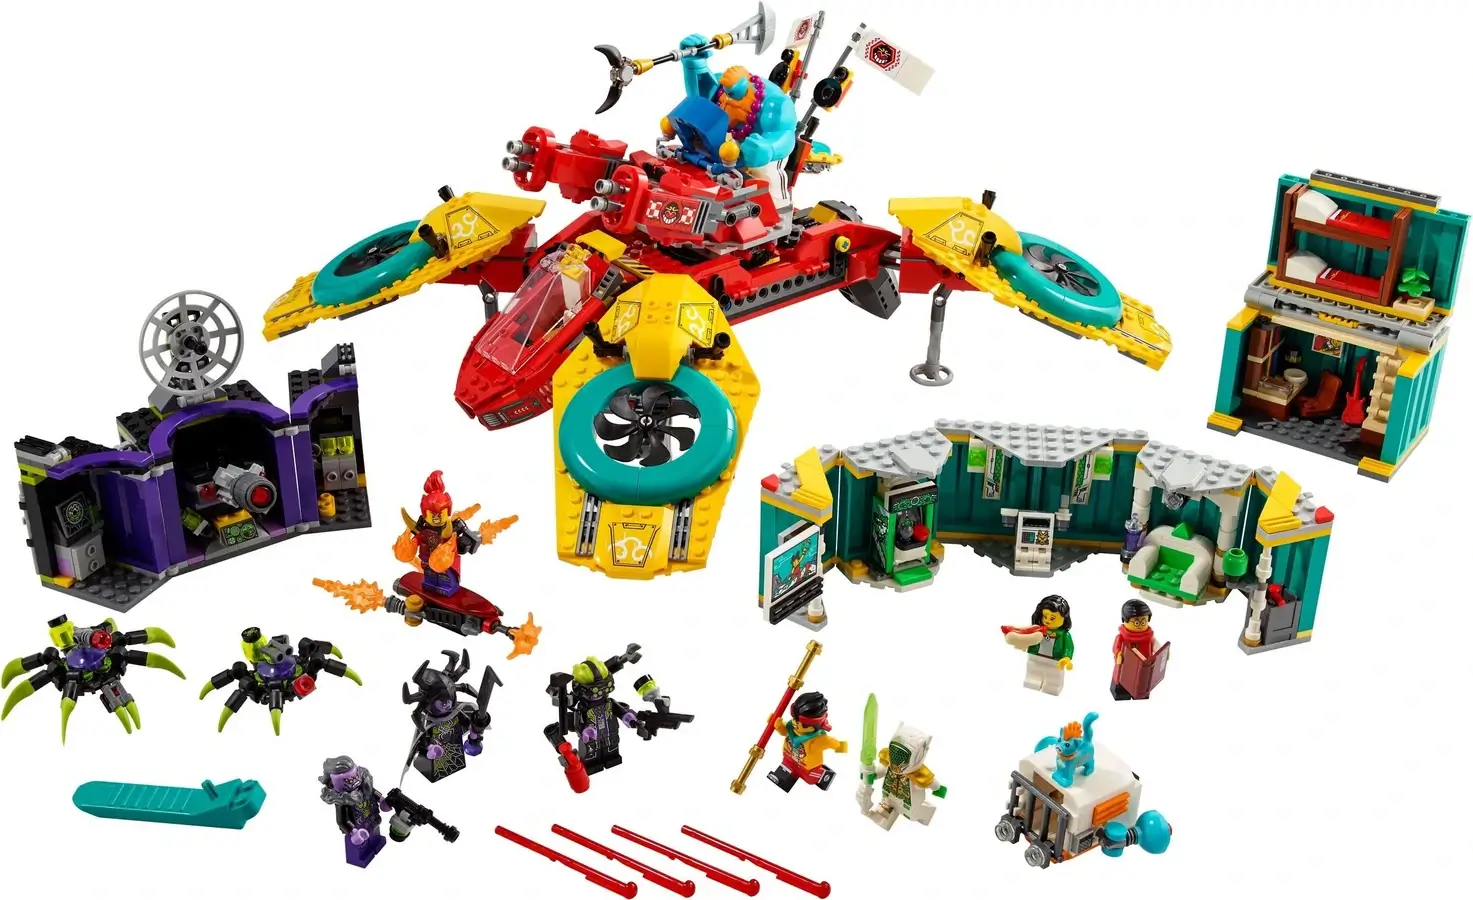 Dronkopter ekipy z serii LEGO® Monkie Kid™